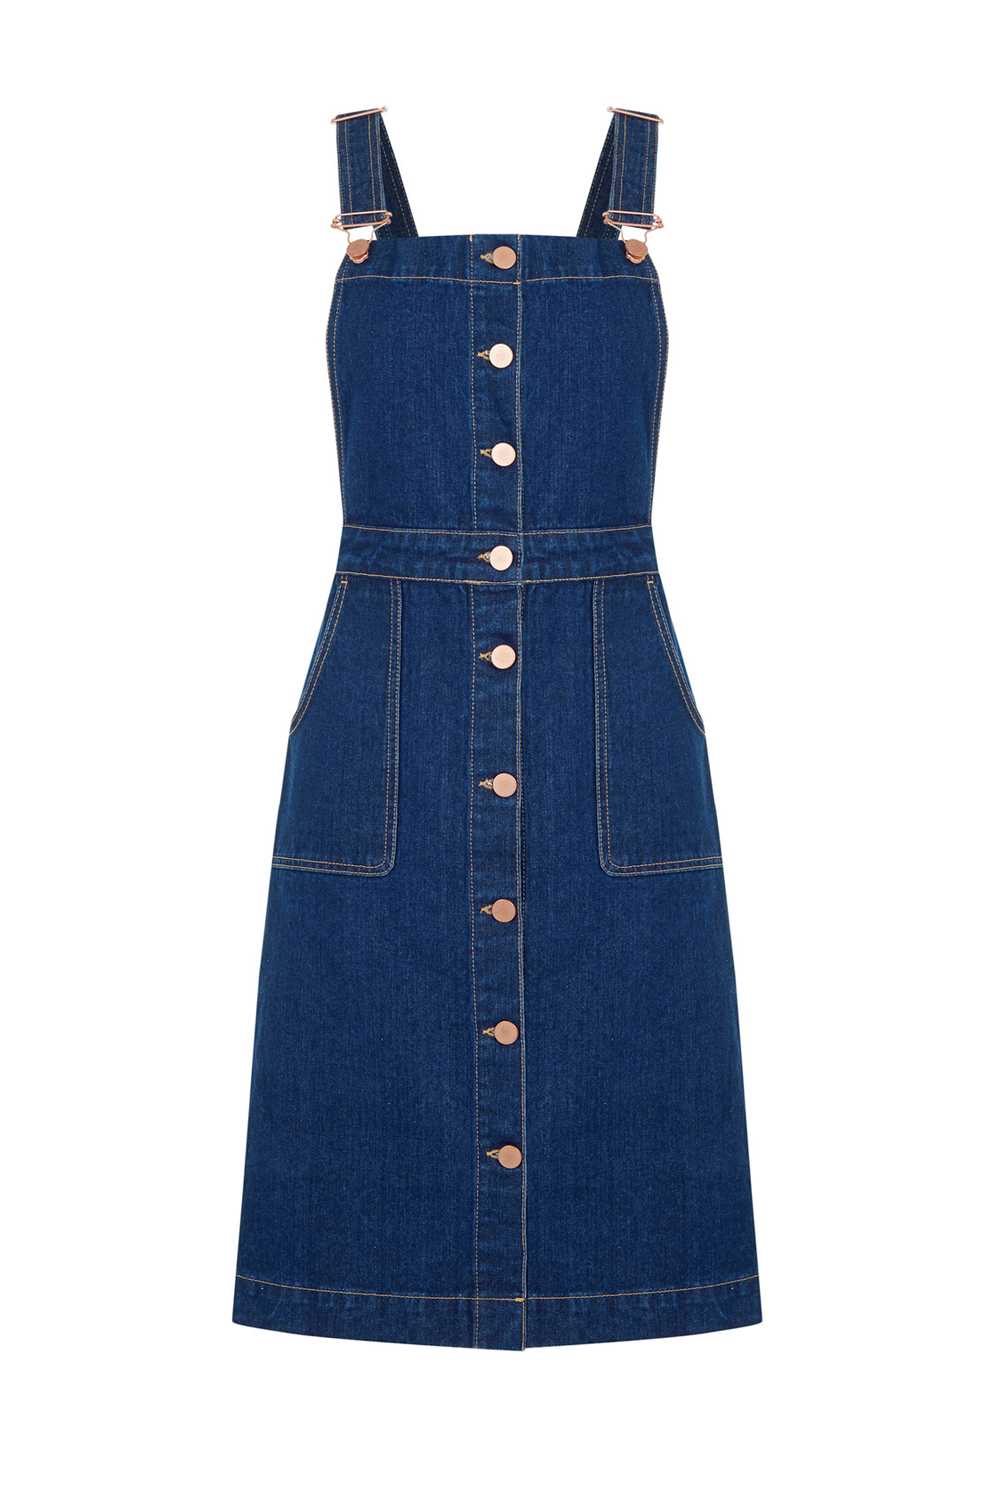 50 best autumn dresses under £50 - Oasis Pinafore Dress, £48 - Page 48 ...